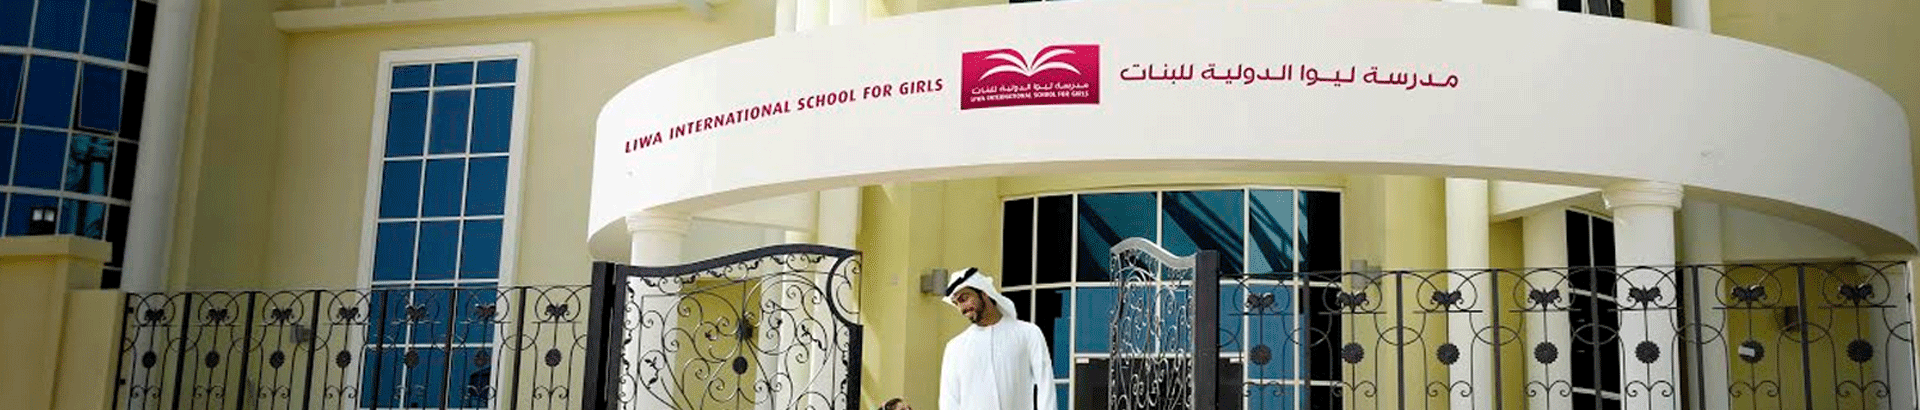 Liwa International School for Girls-edcare.ae